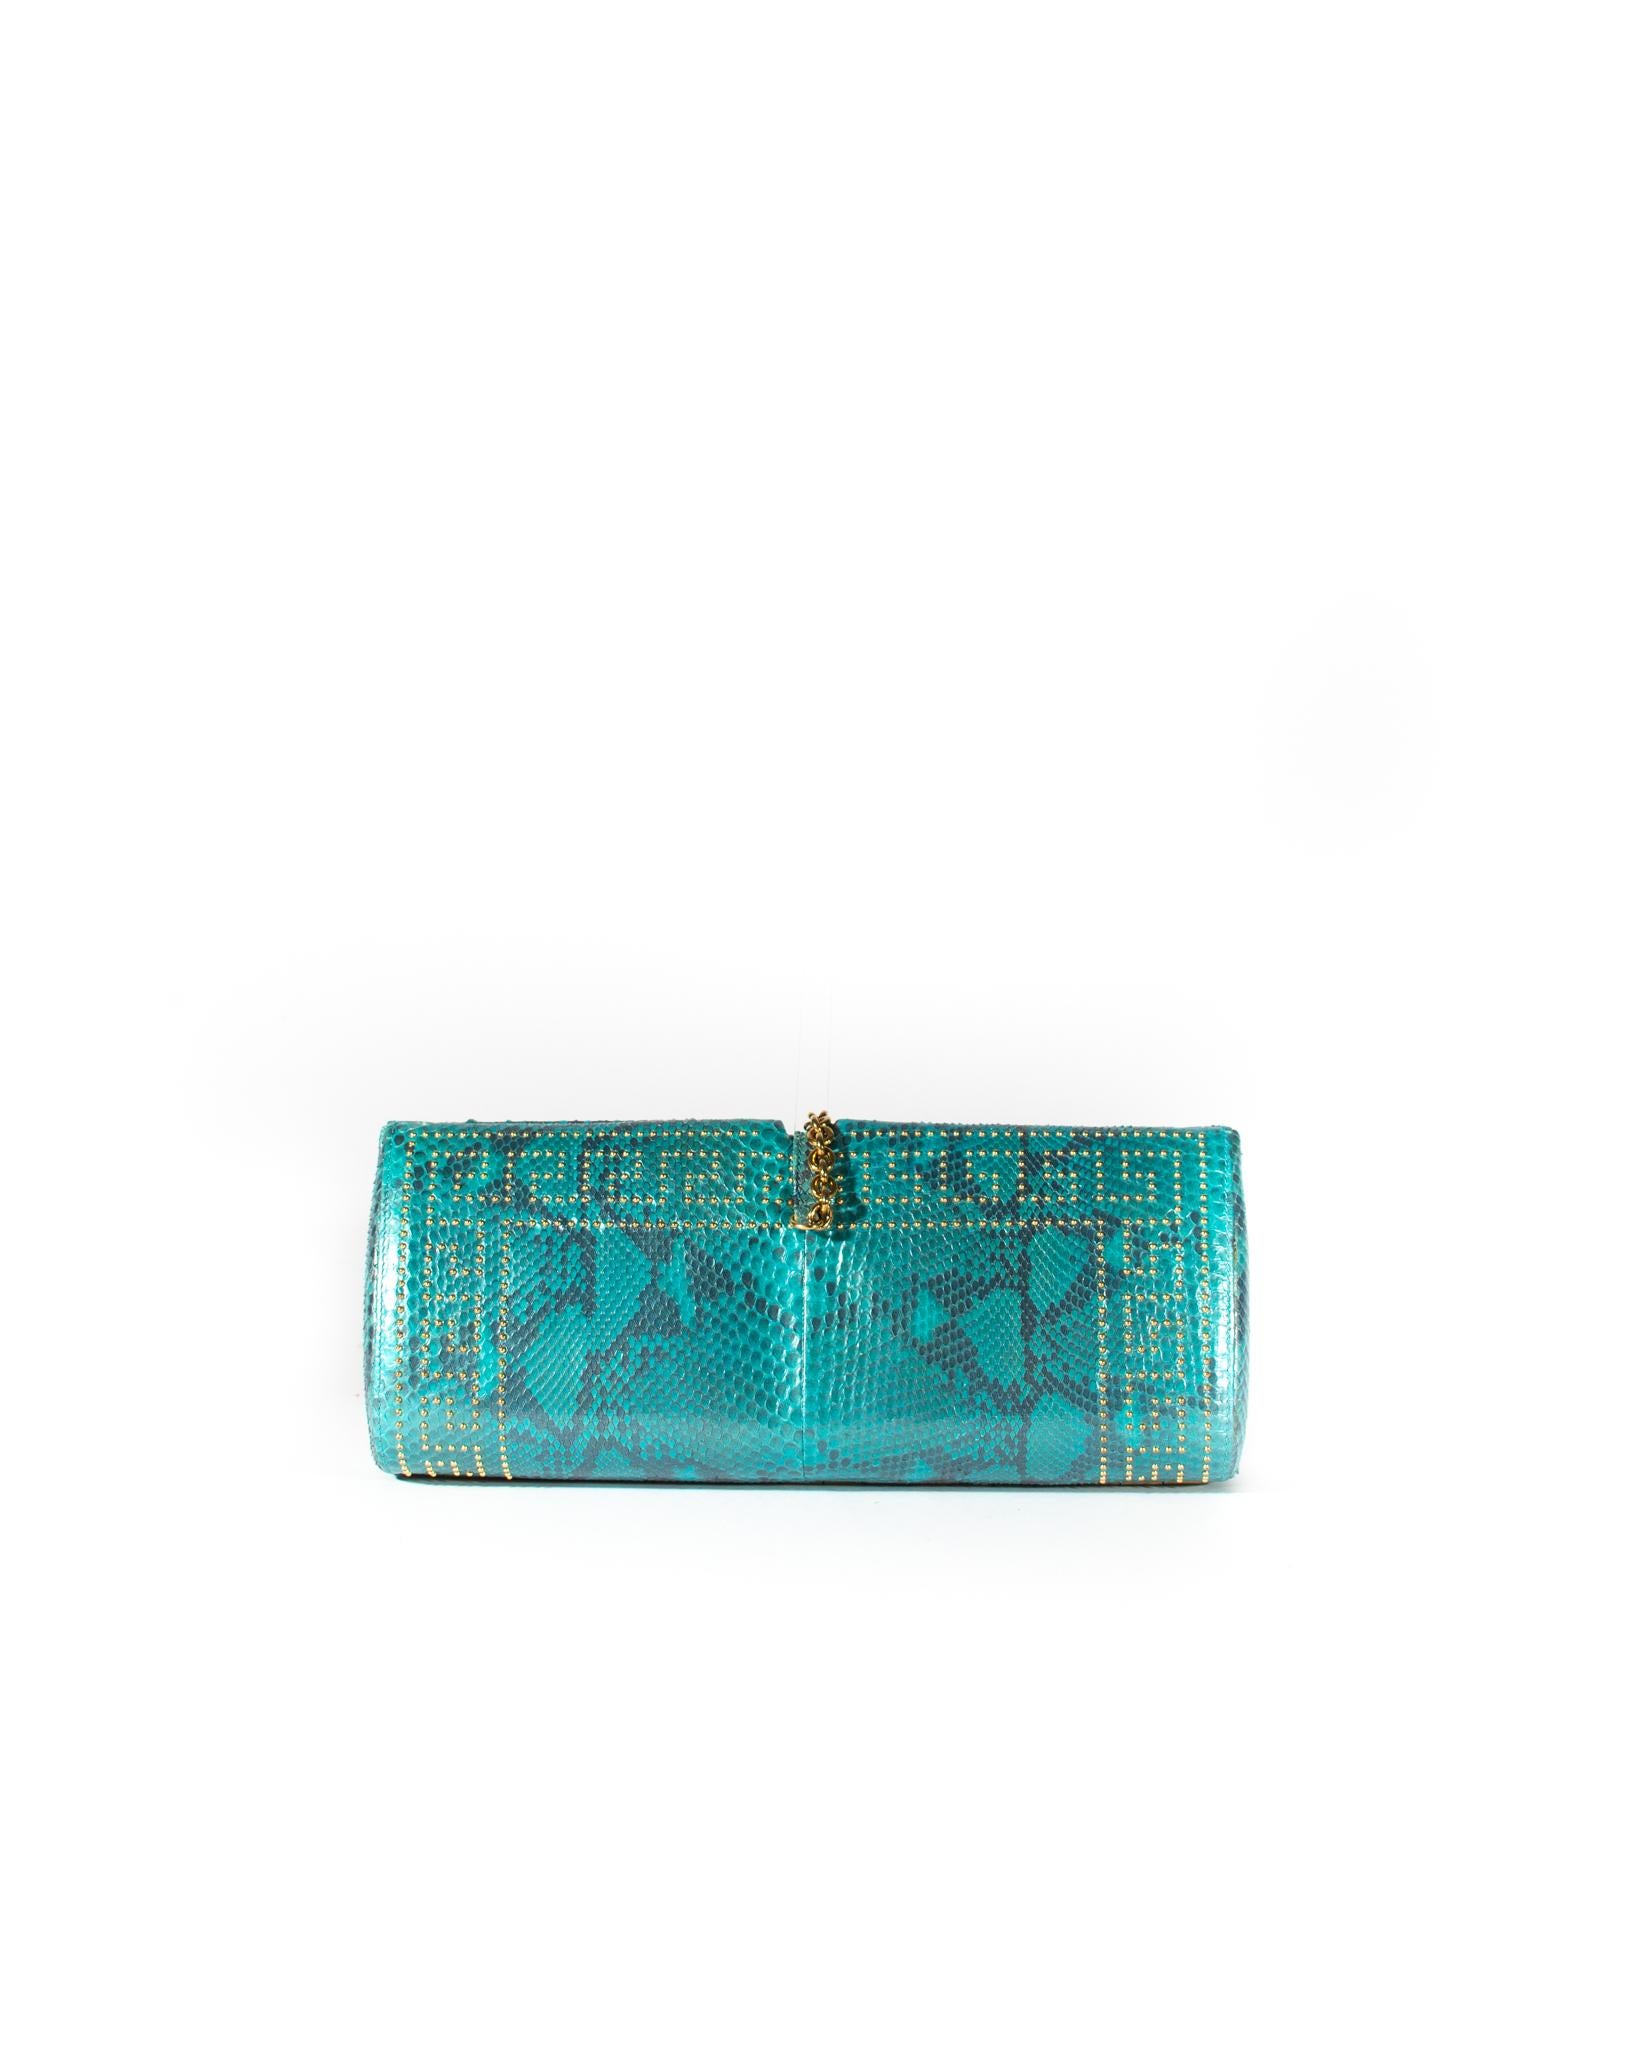 S/S 2000 Gianni Versace Python Blue Convertible Evening Bag & Clutch Donatella For Sale 1